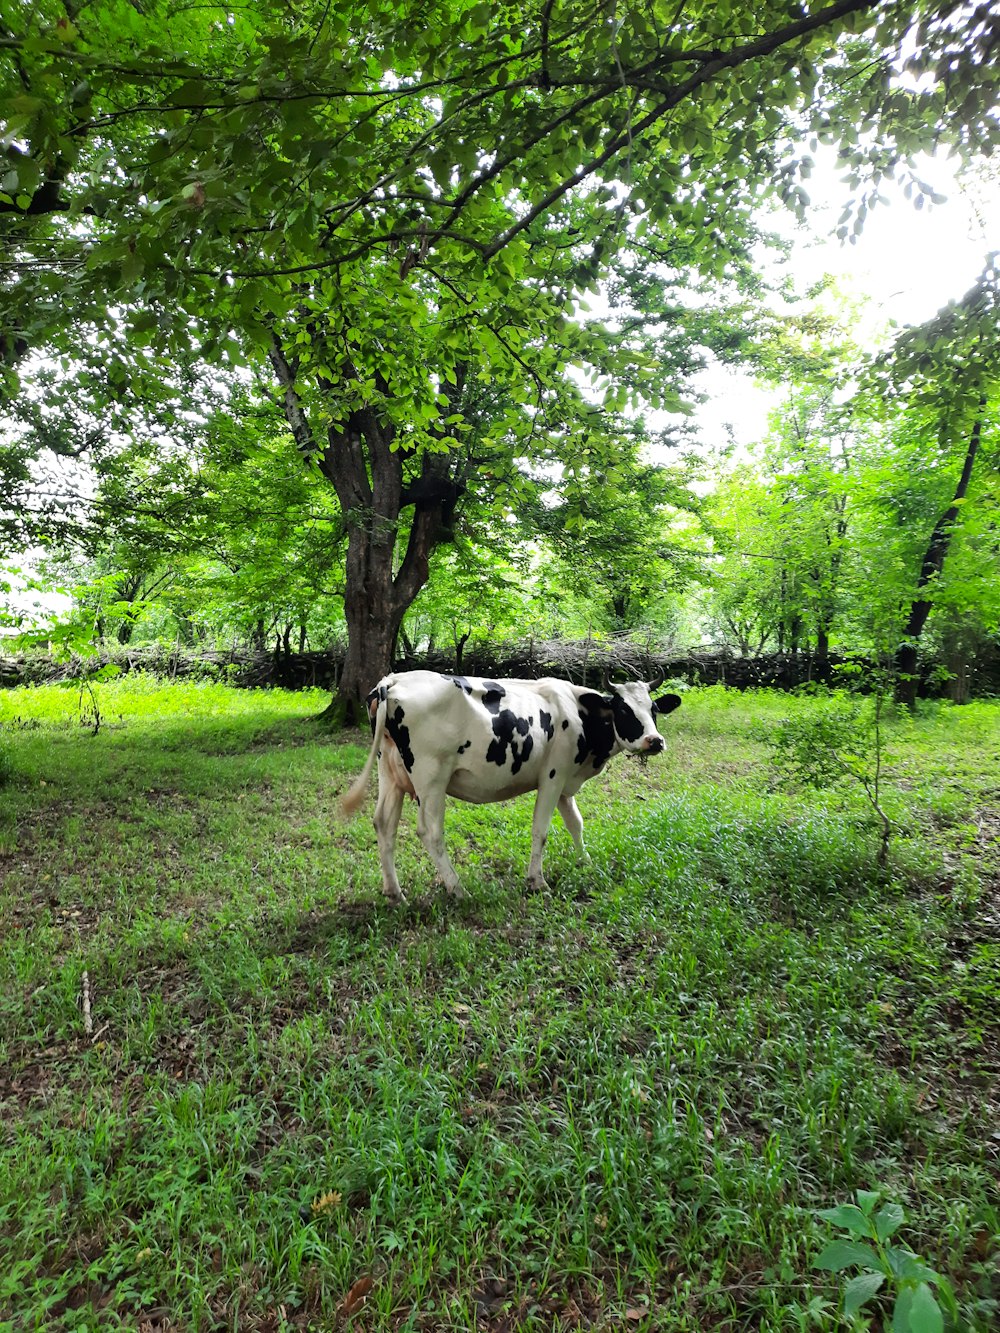 a black and white cow walking through a lush green field